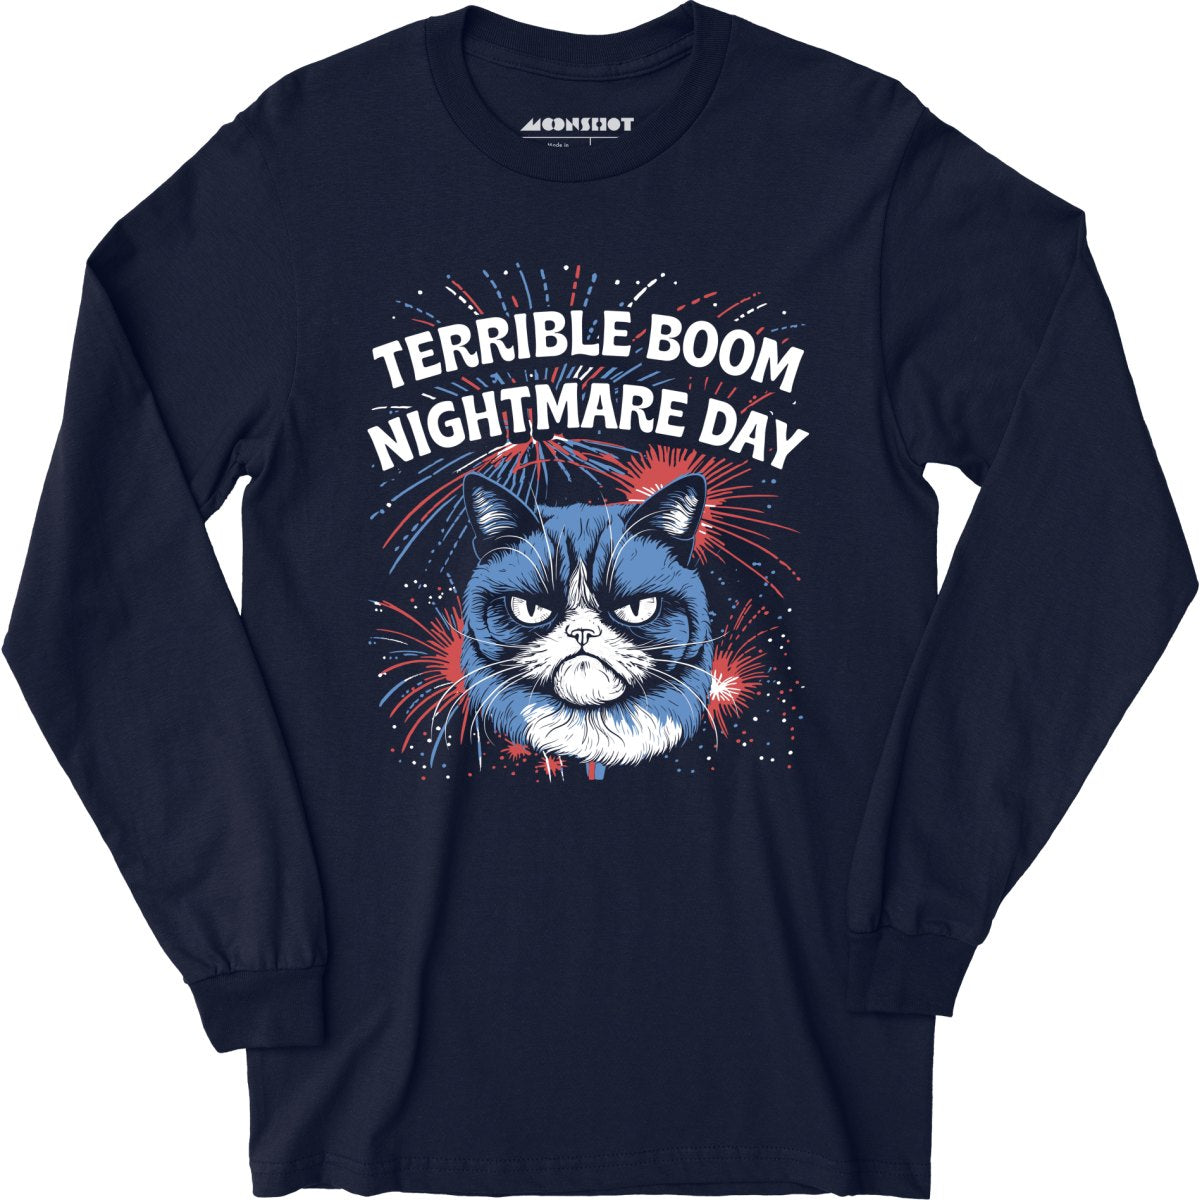 Terrible Boom Nightmare Day - Long Sleeve T-Shirt